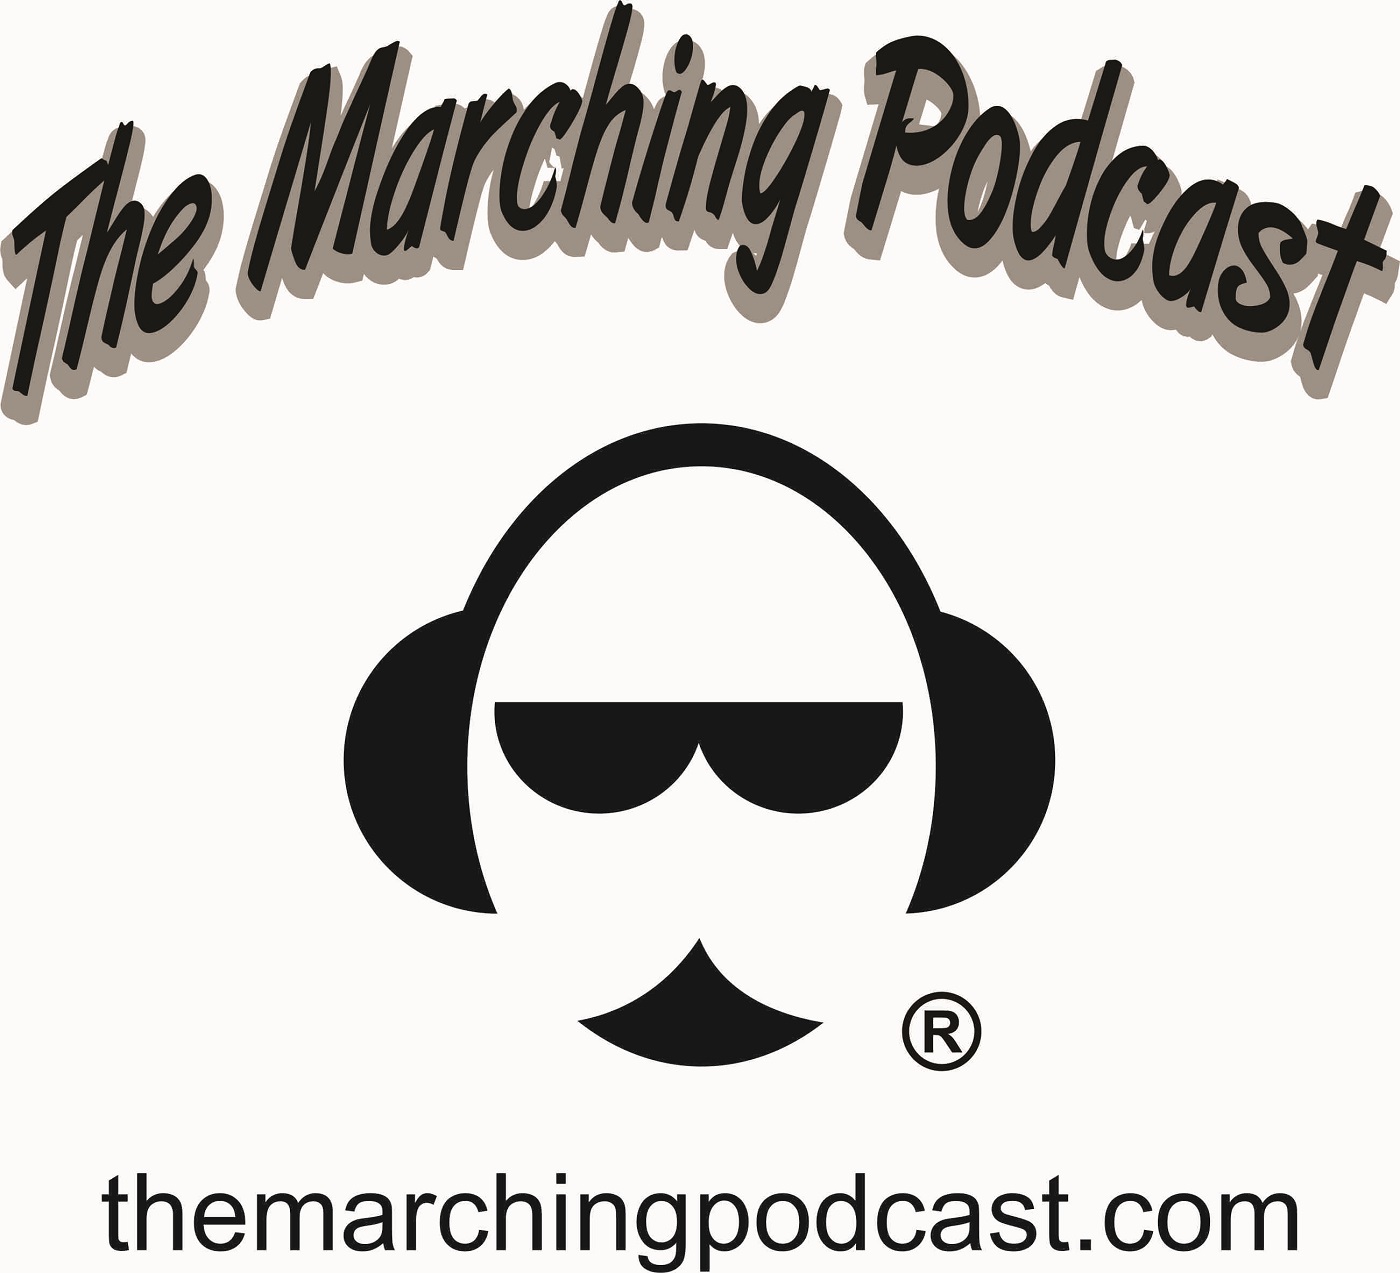 Joseph Beard The Marching Podcast Logo (1)